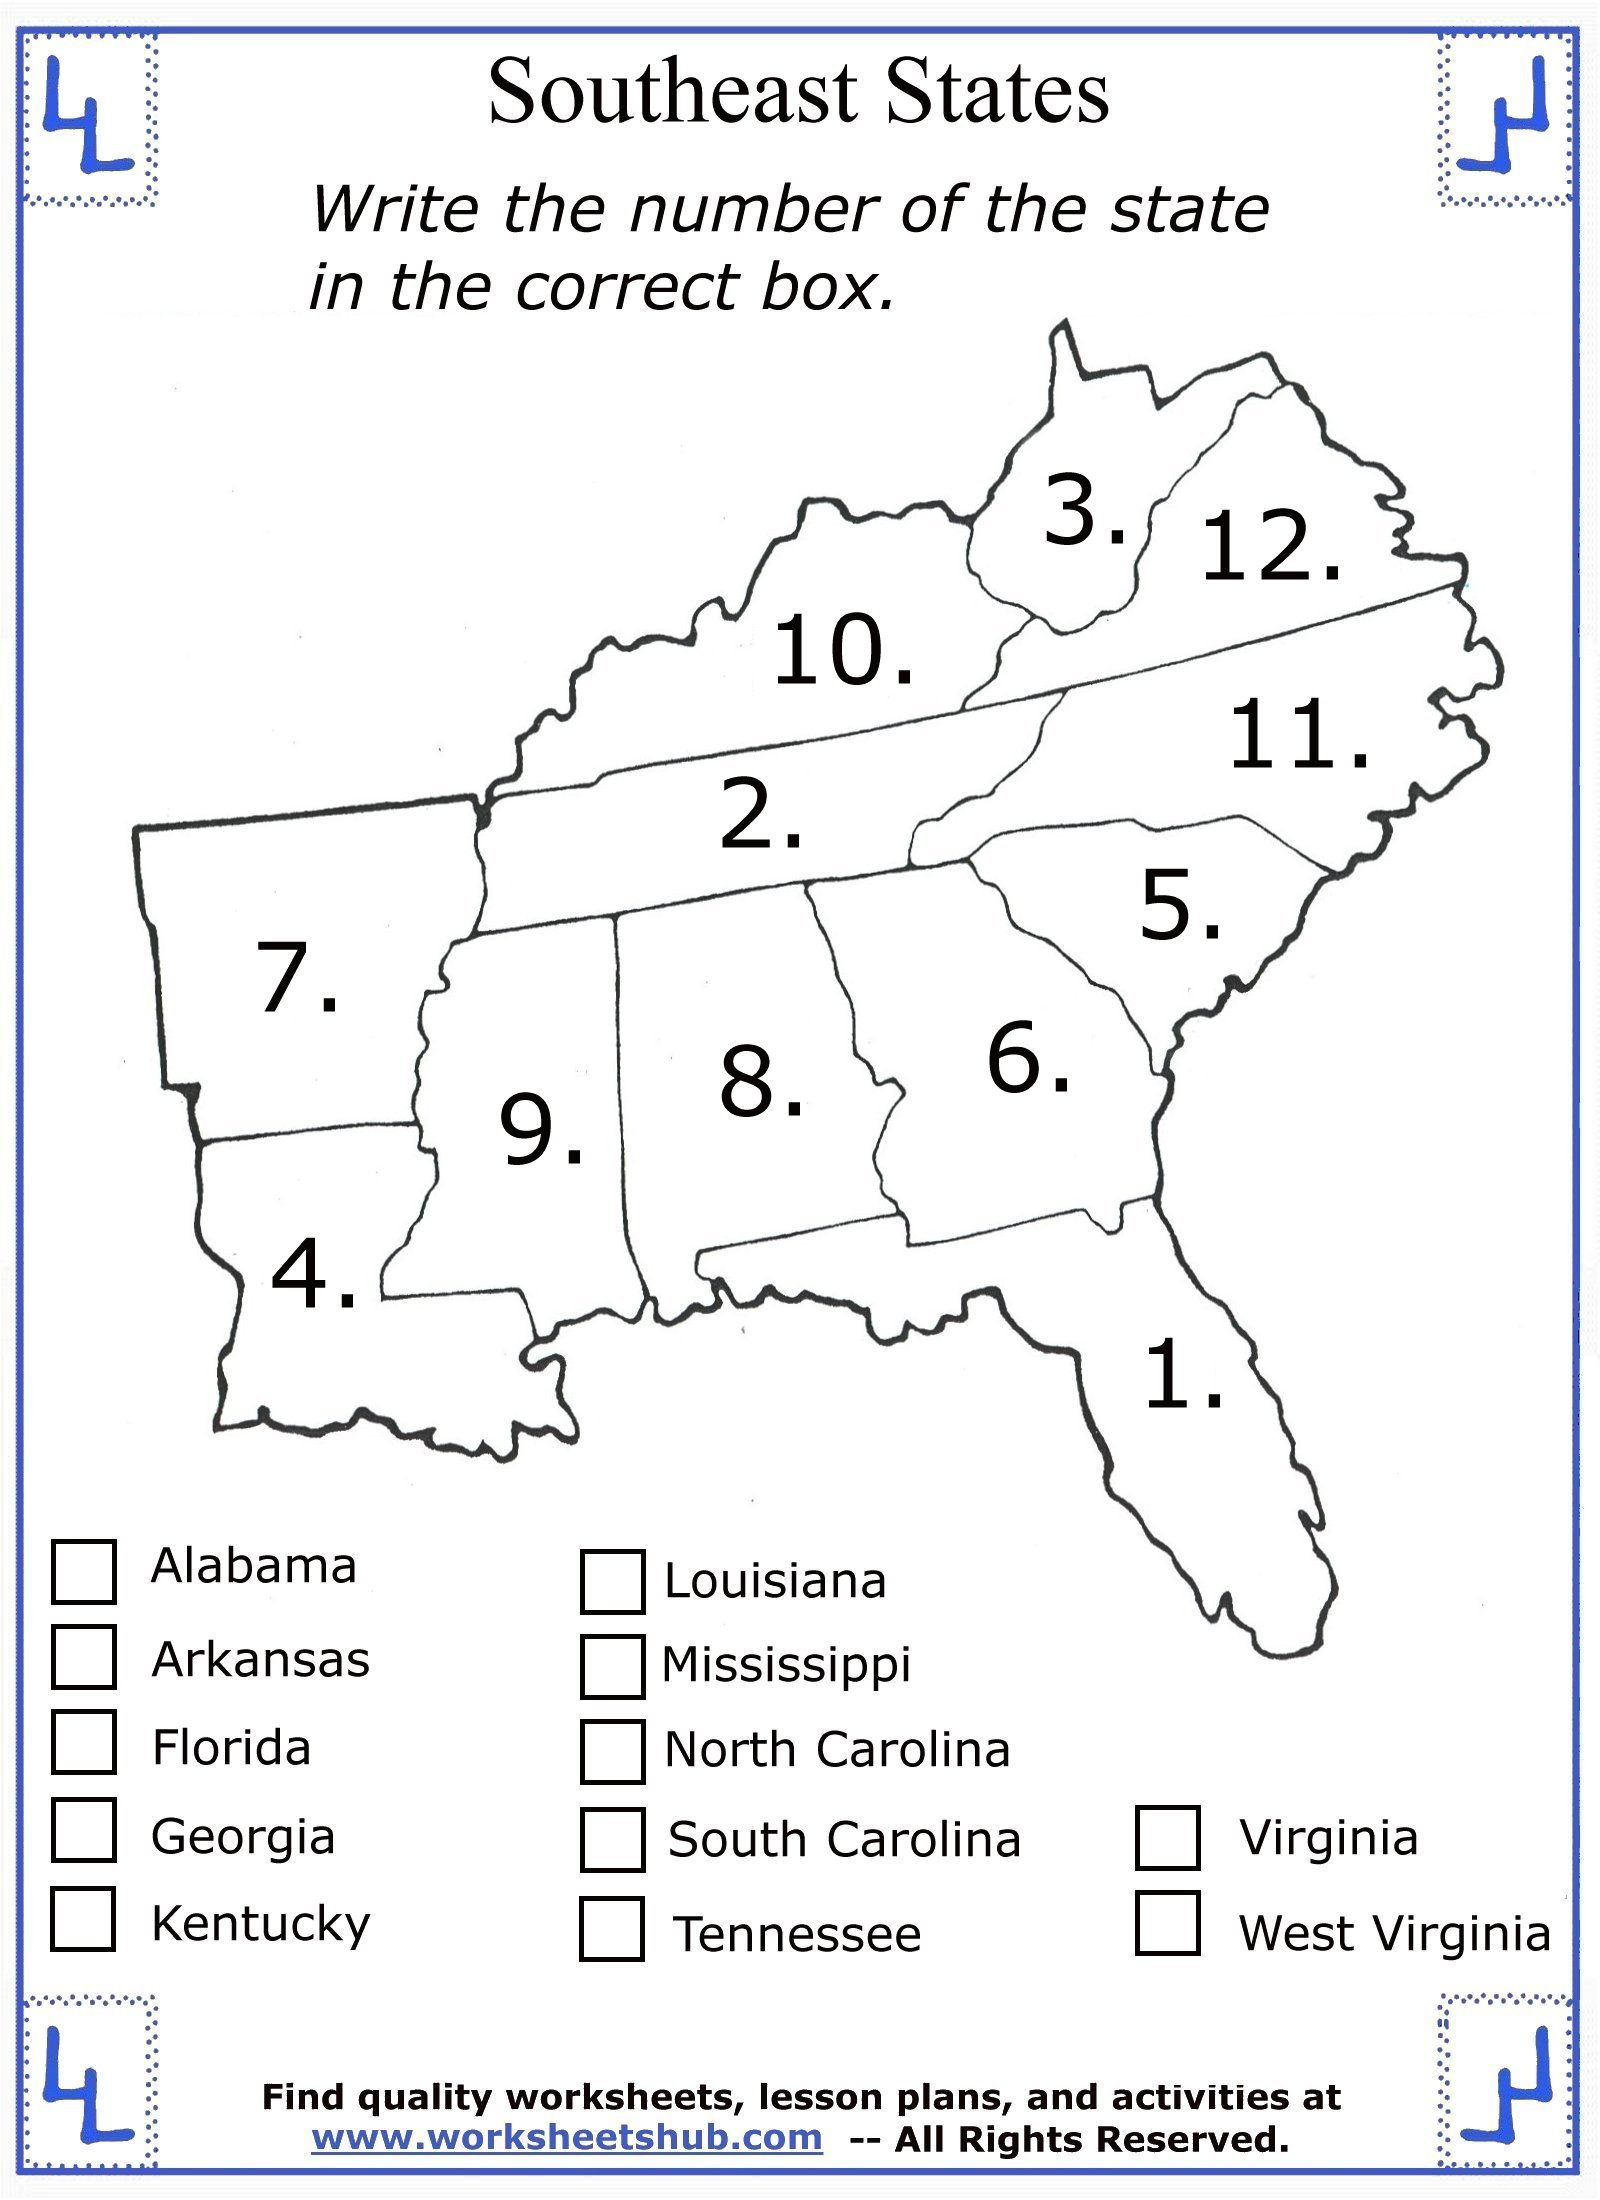 4th Grade Social Studies Southeast Region States